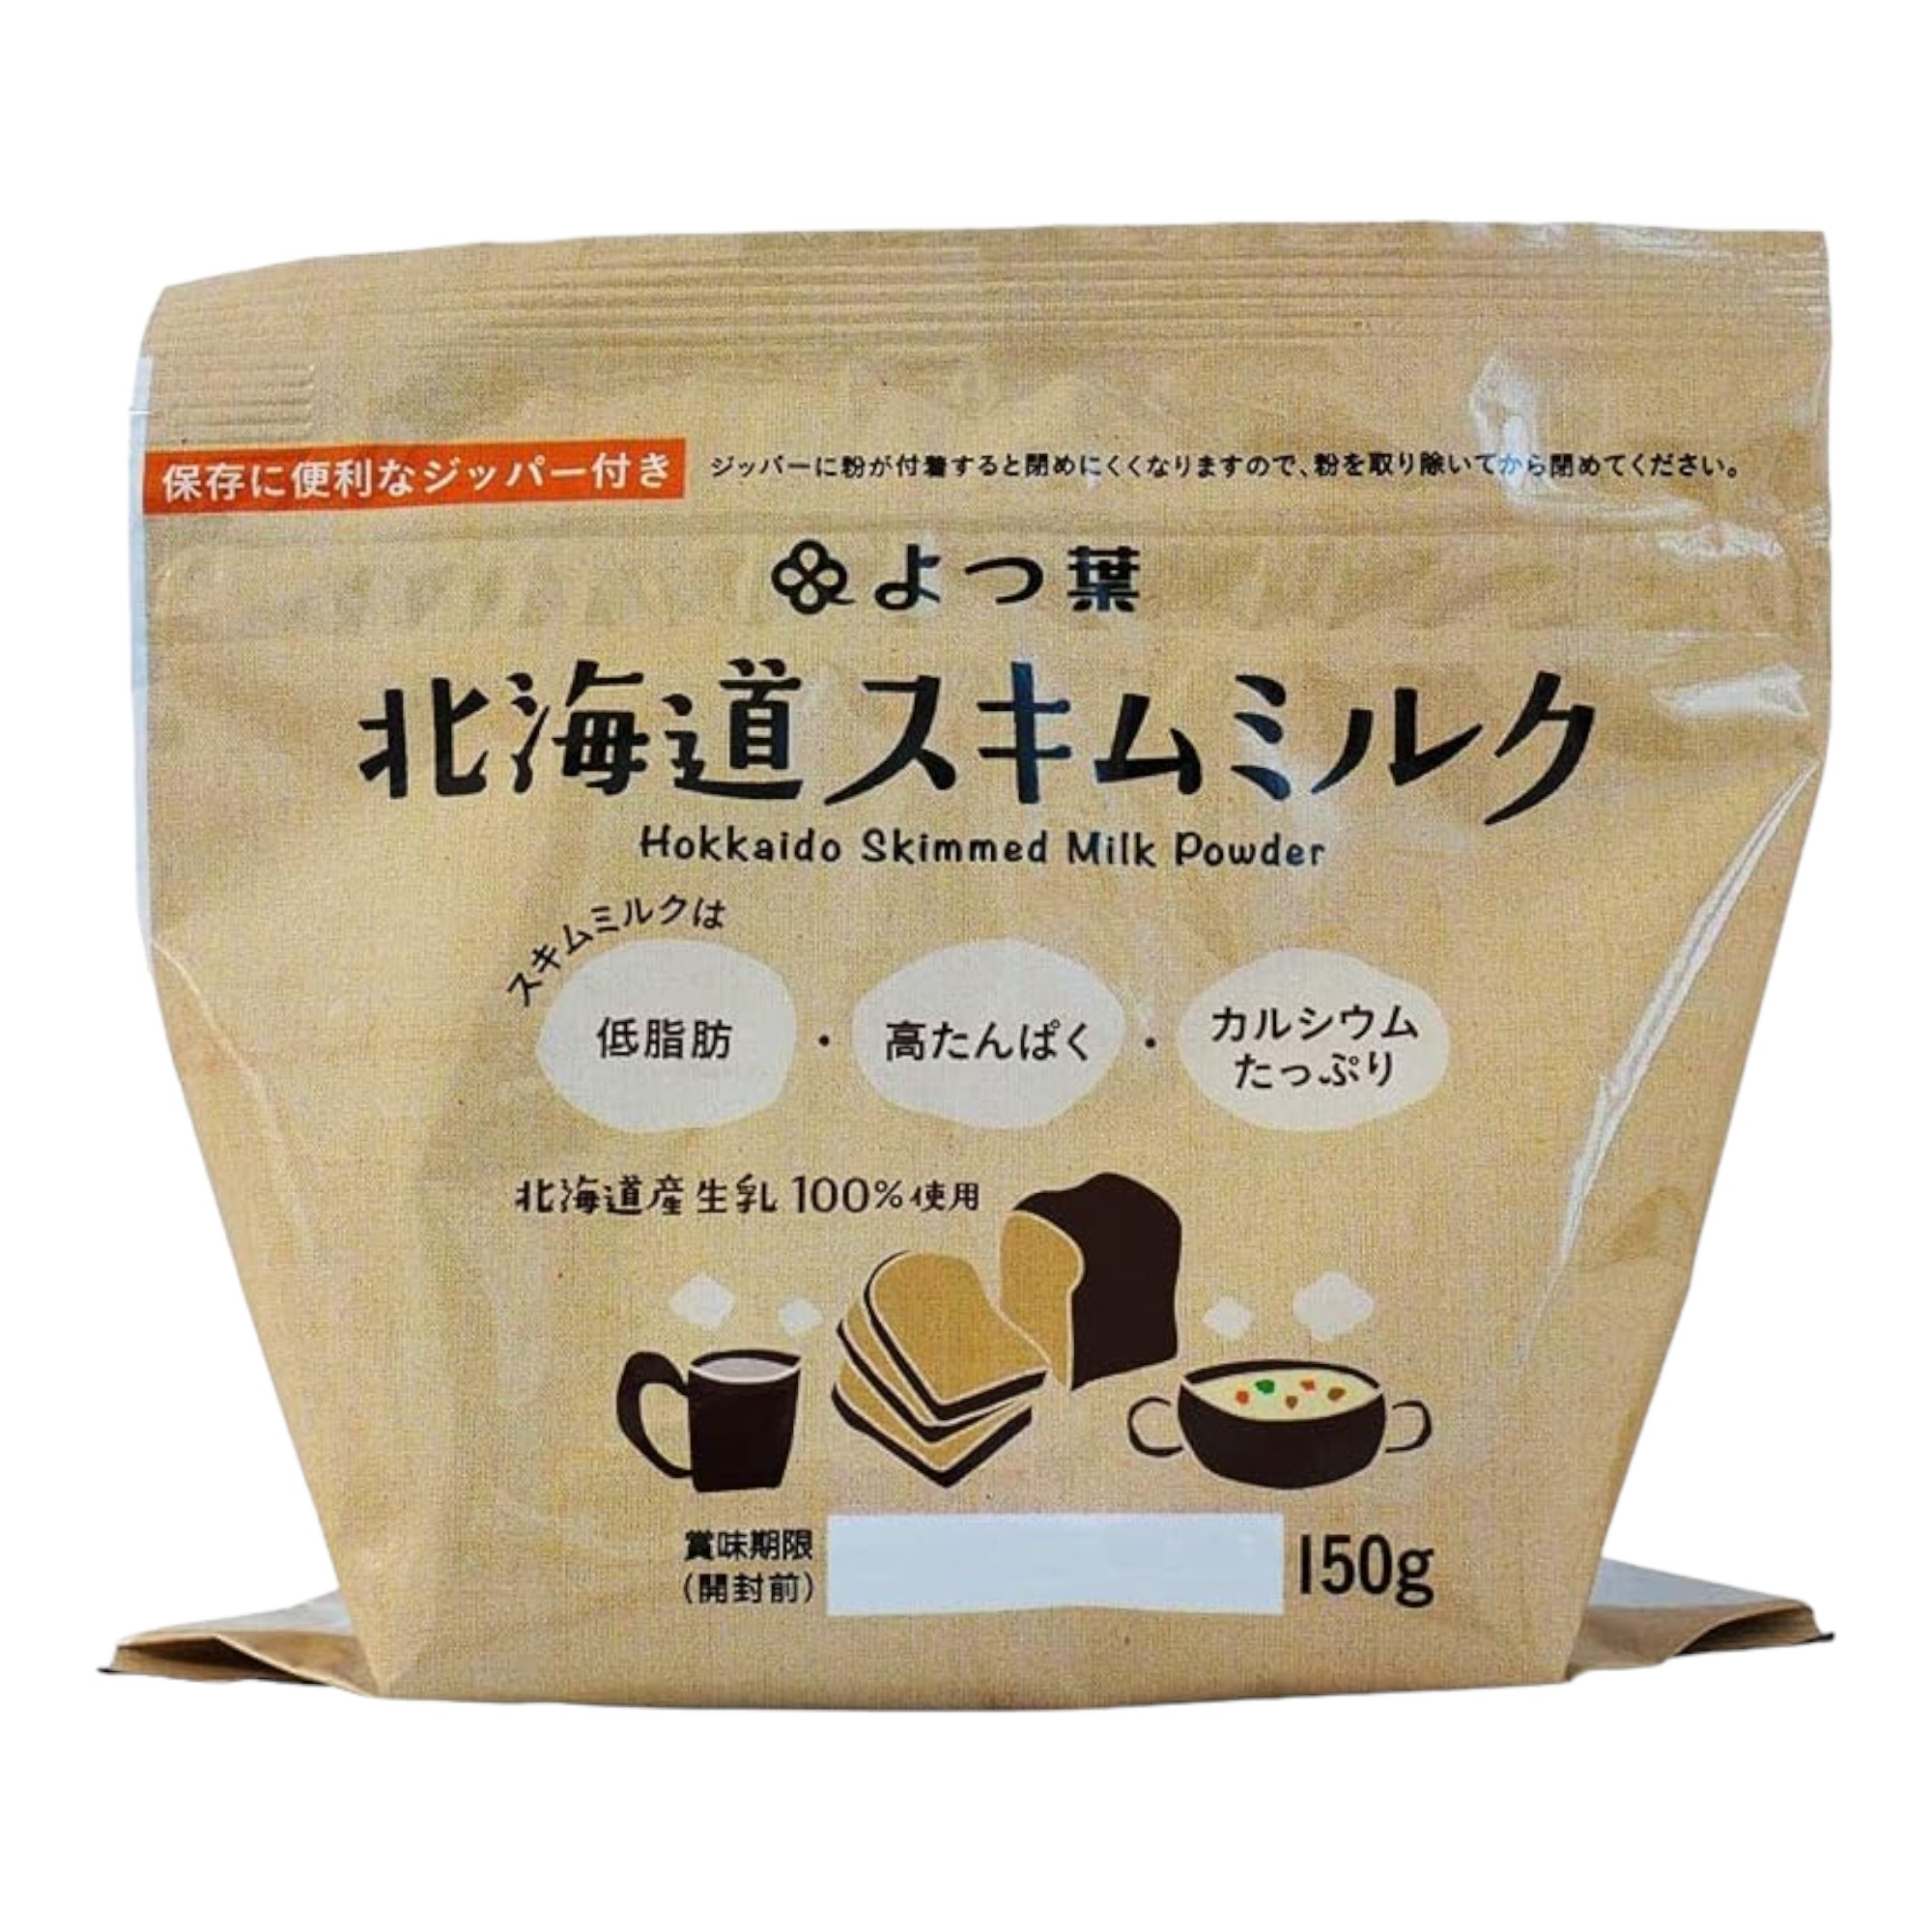 yo. leaf Hokkaido skim milk 150g... degreasing flour .